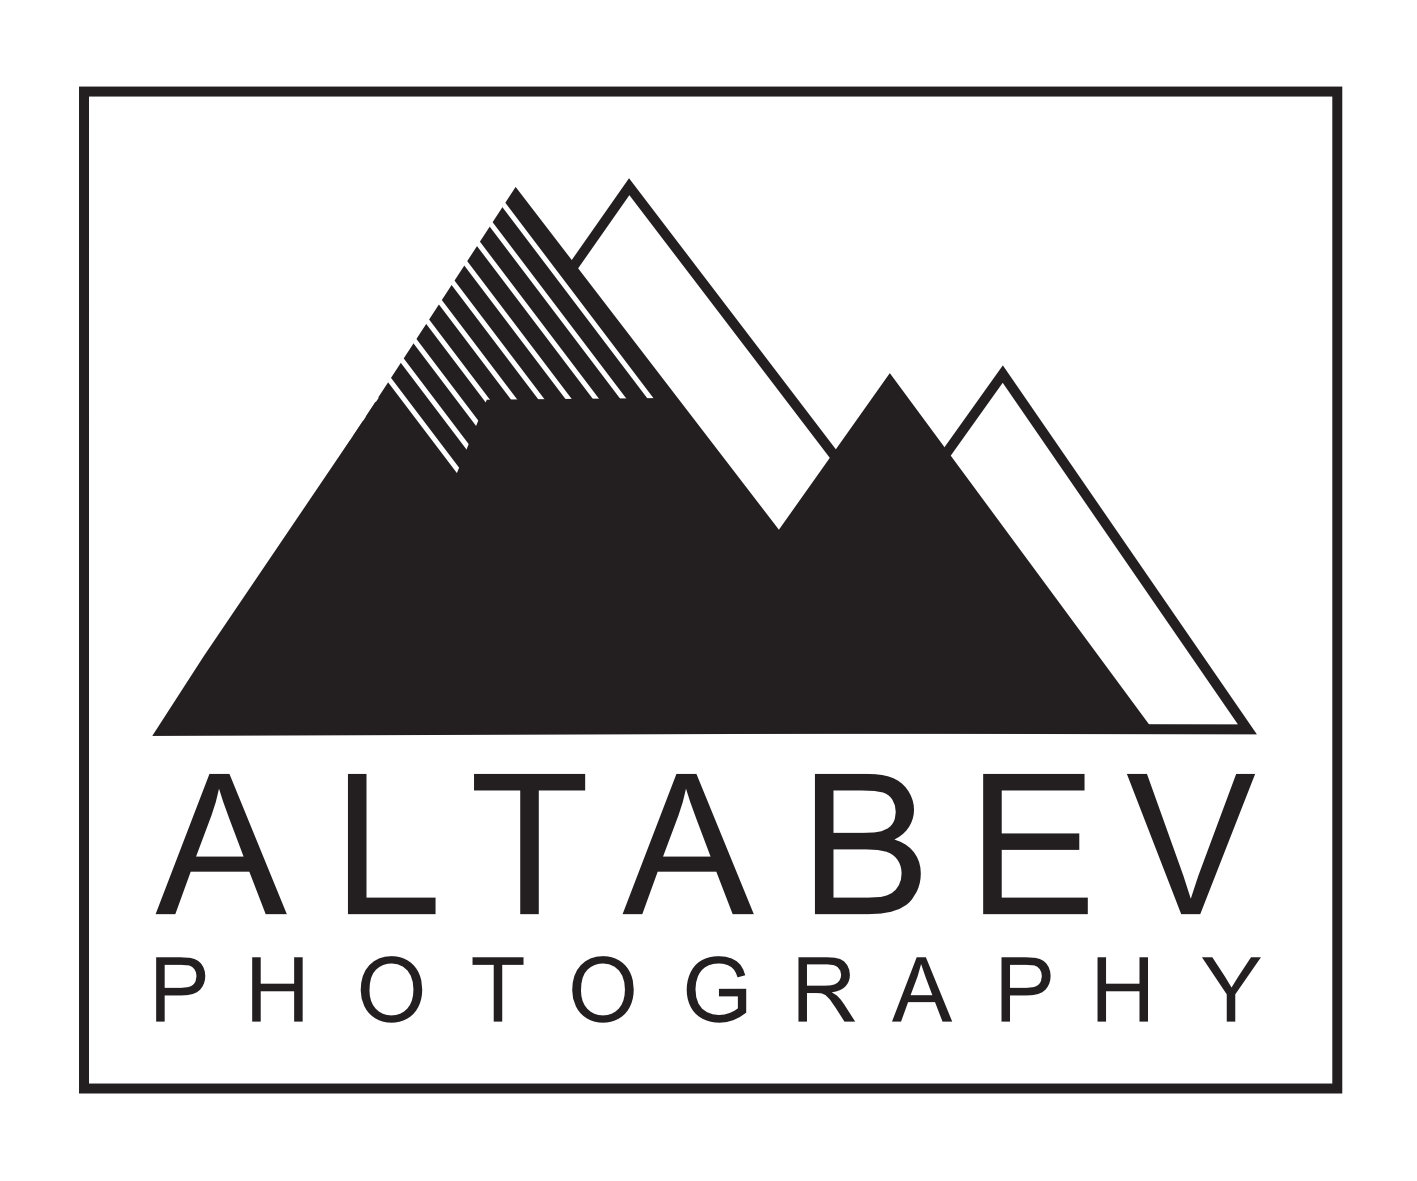 David Altabev Photography